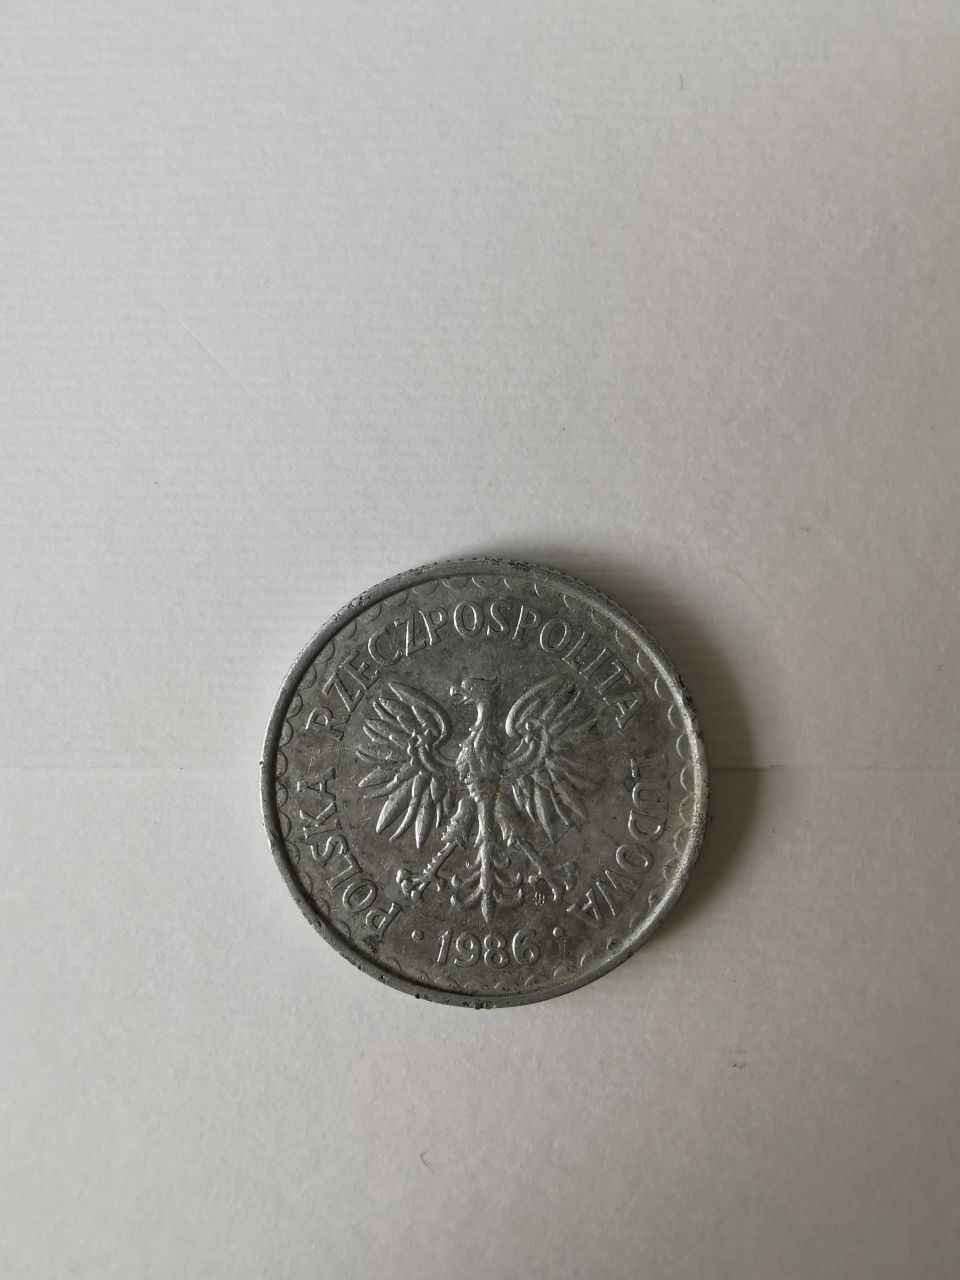 Stara moneta 1zl z 1986 roku